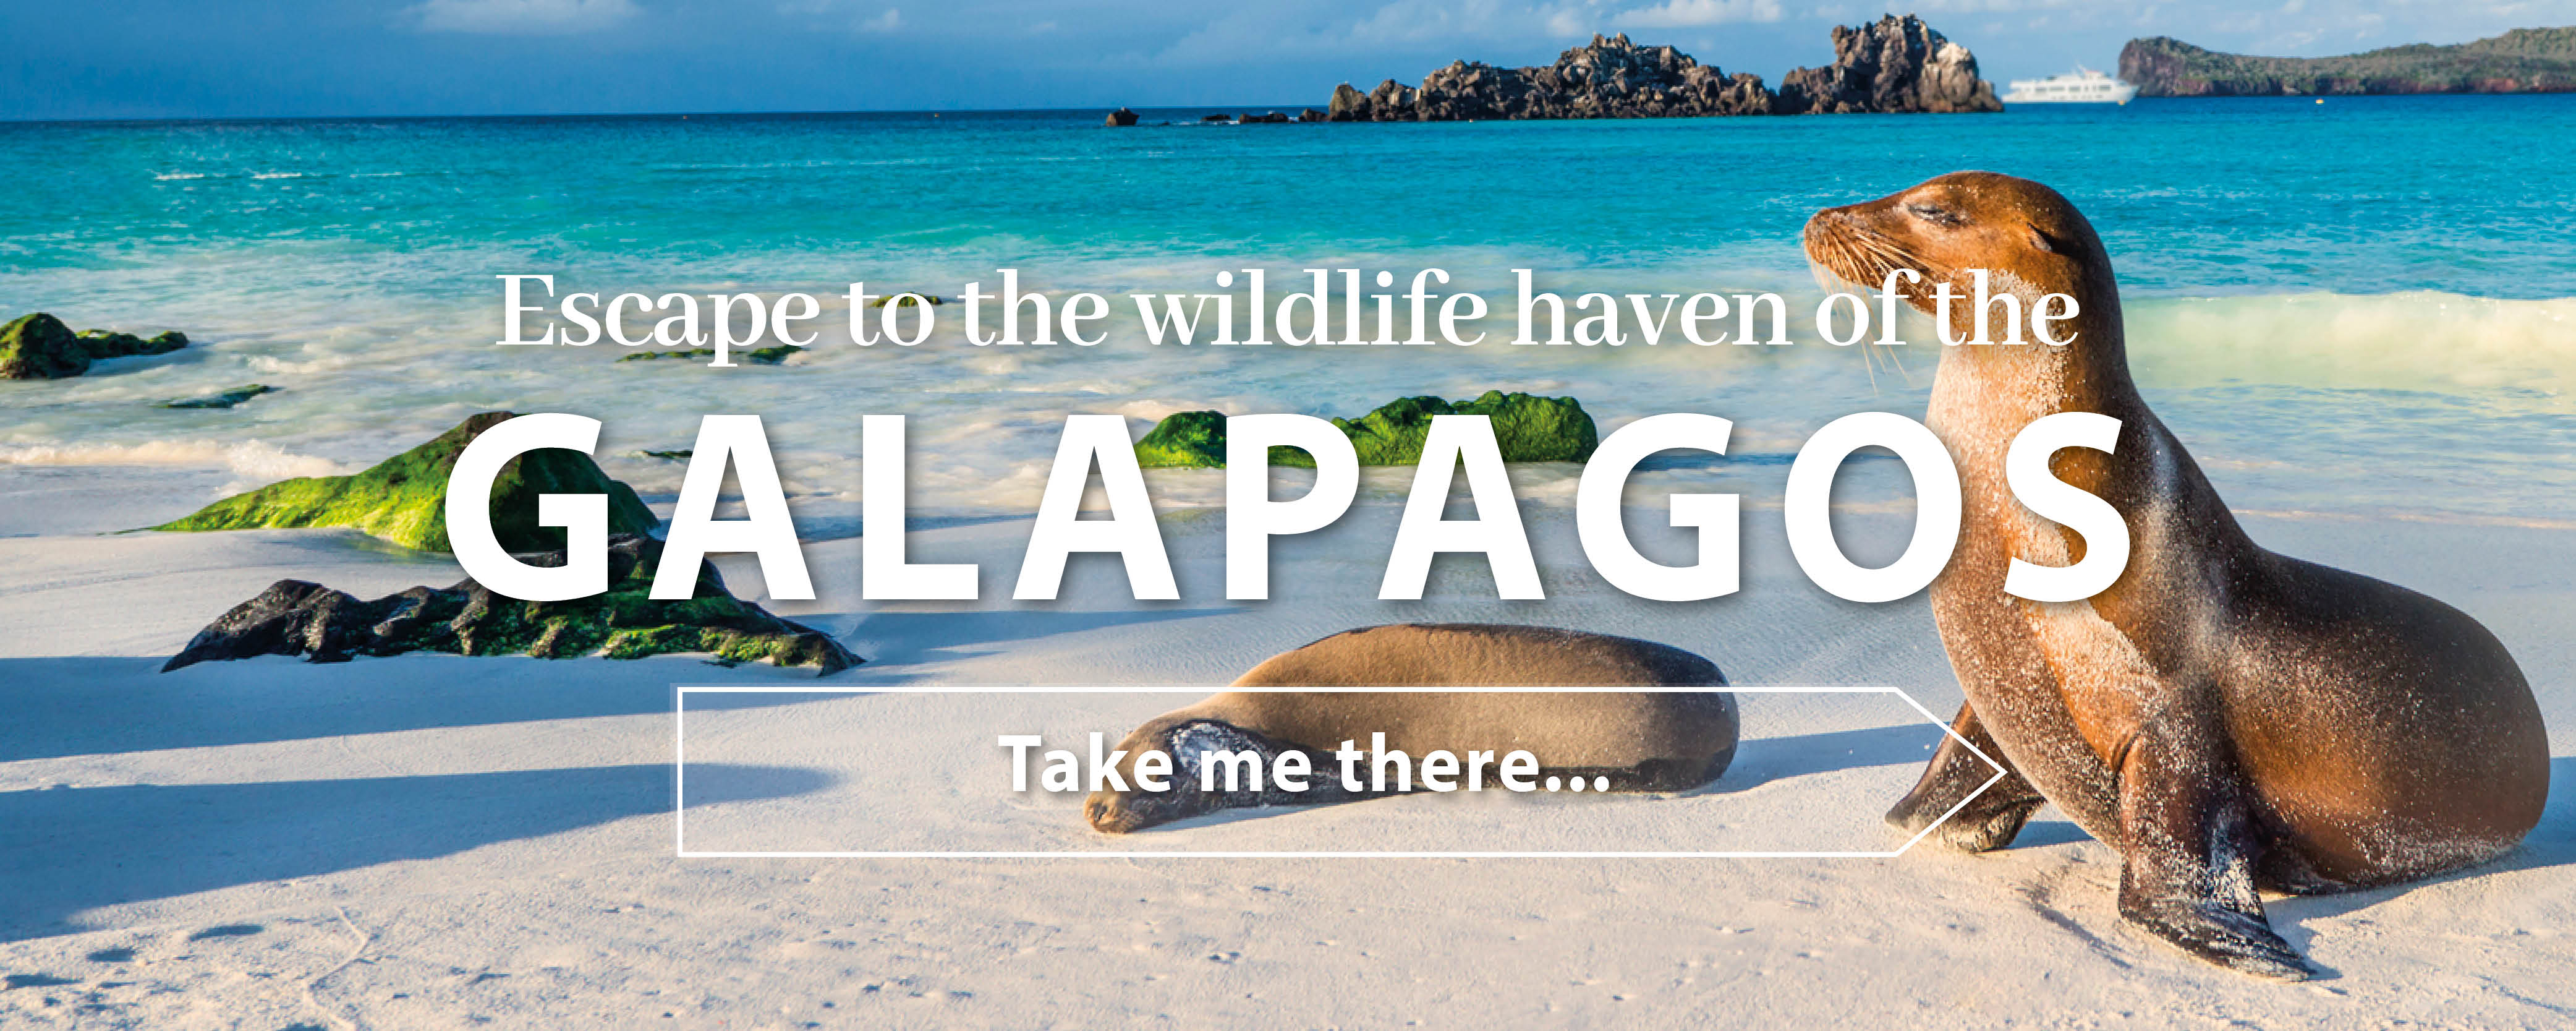 test free travel destinations Galapagos